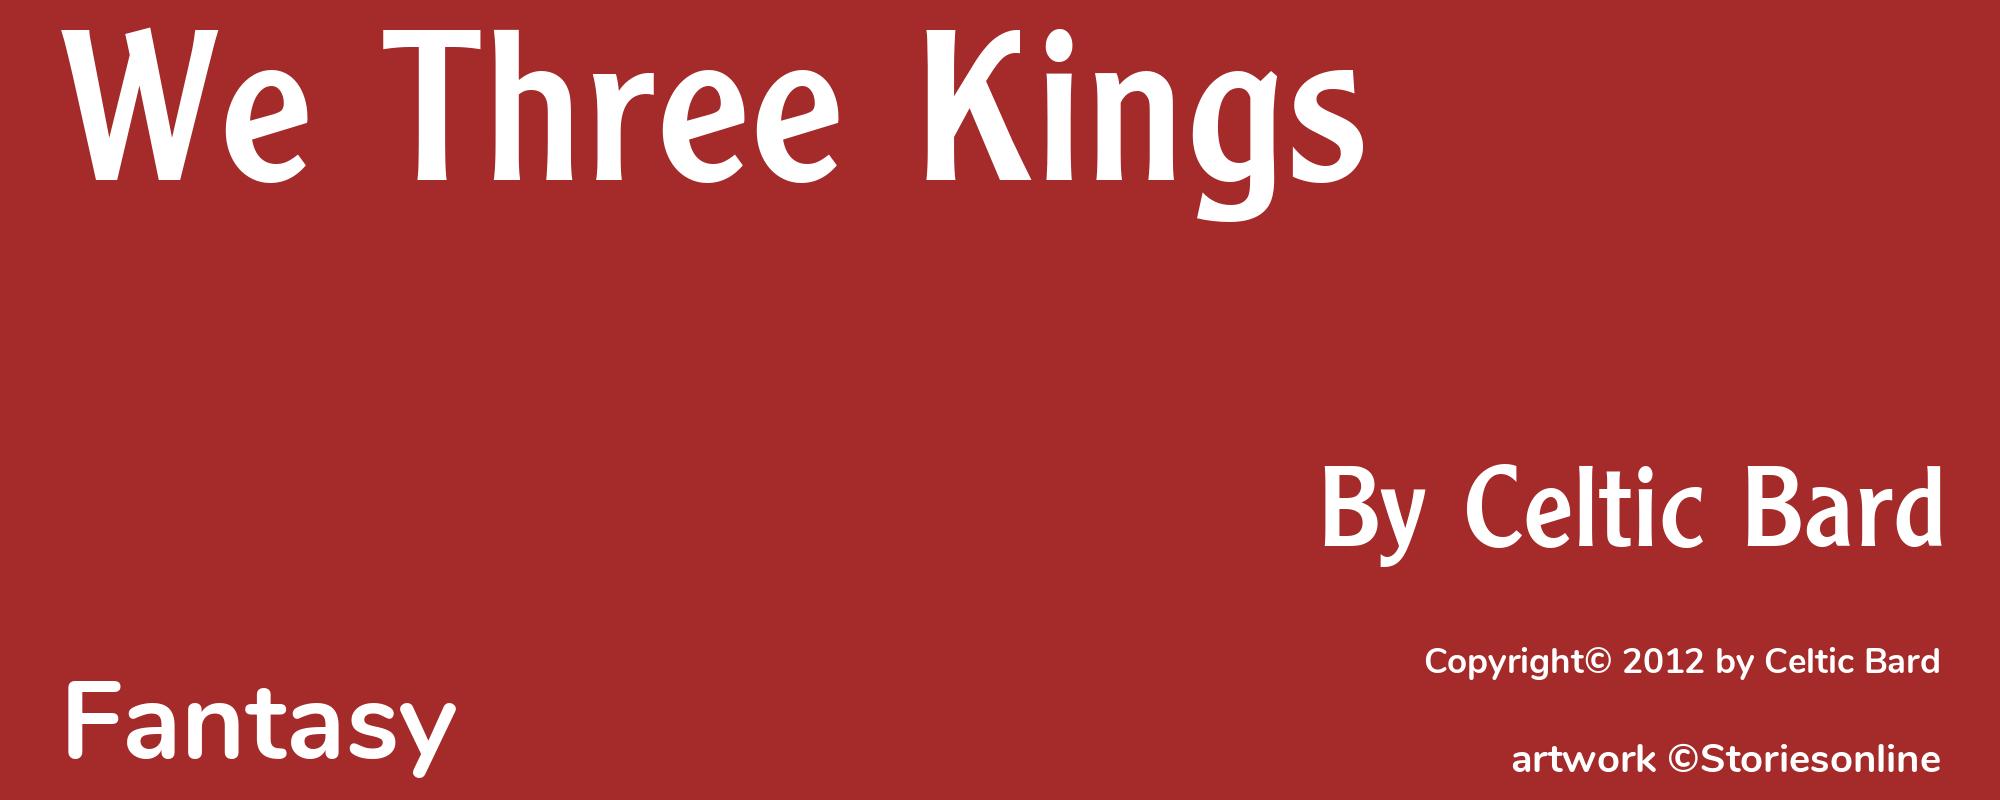 We Three Kings - Cover